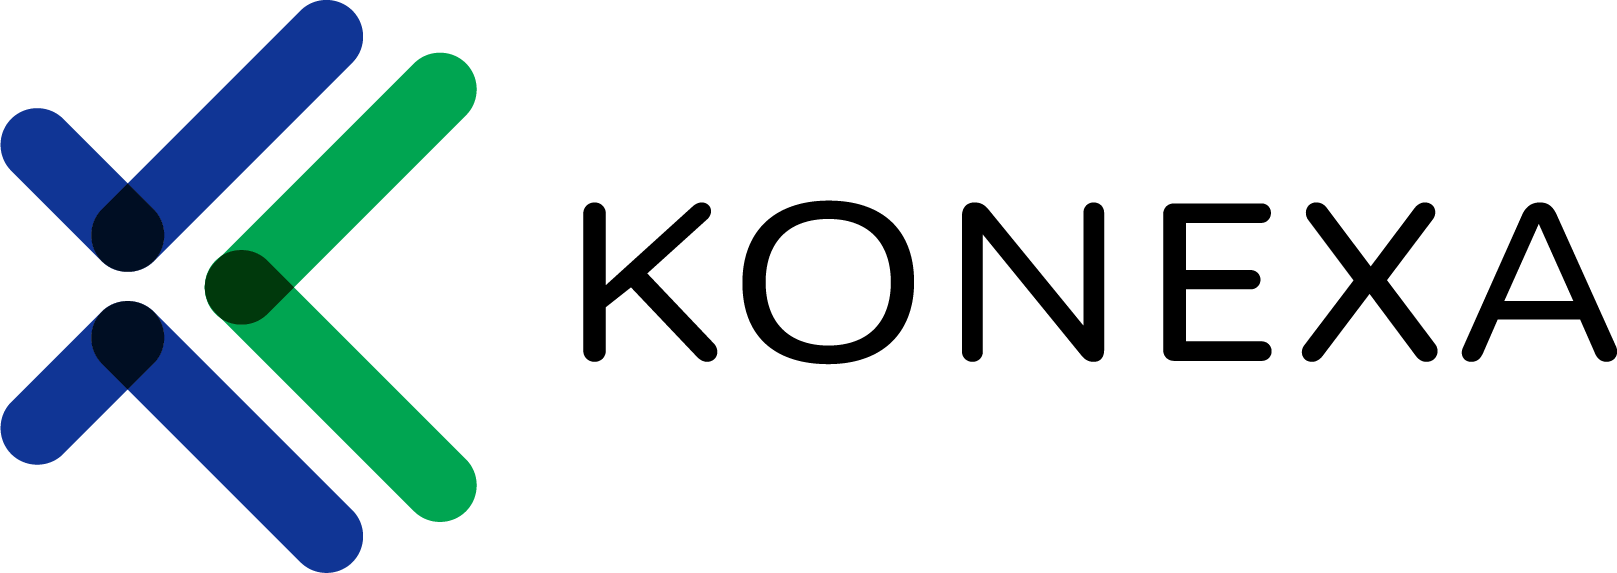 konexa logo